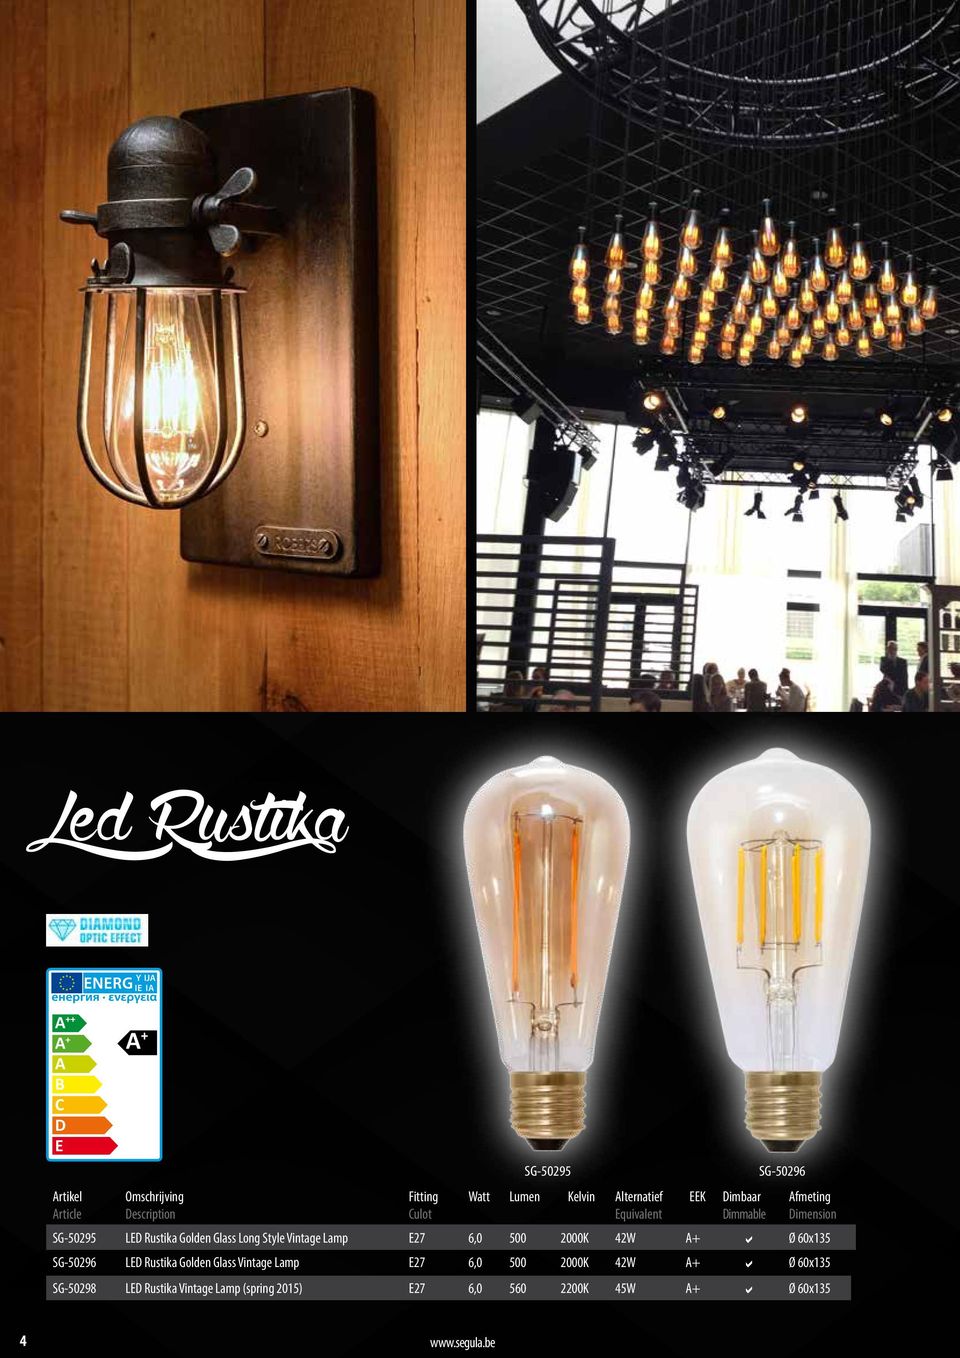 SG-50296 LED Rustika Golden Glass Vintage Lamp E27 6,0 500 2000K 42W A+ a Ø